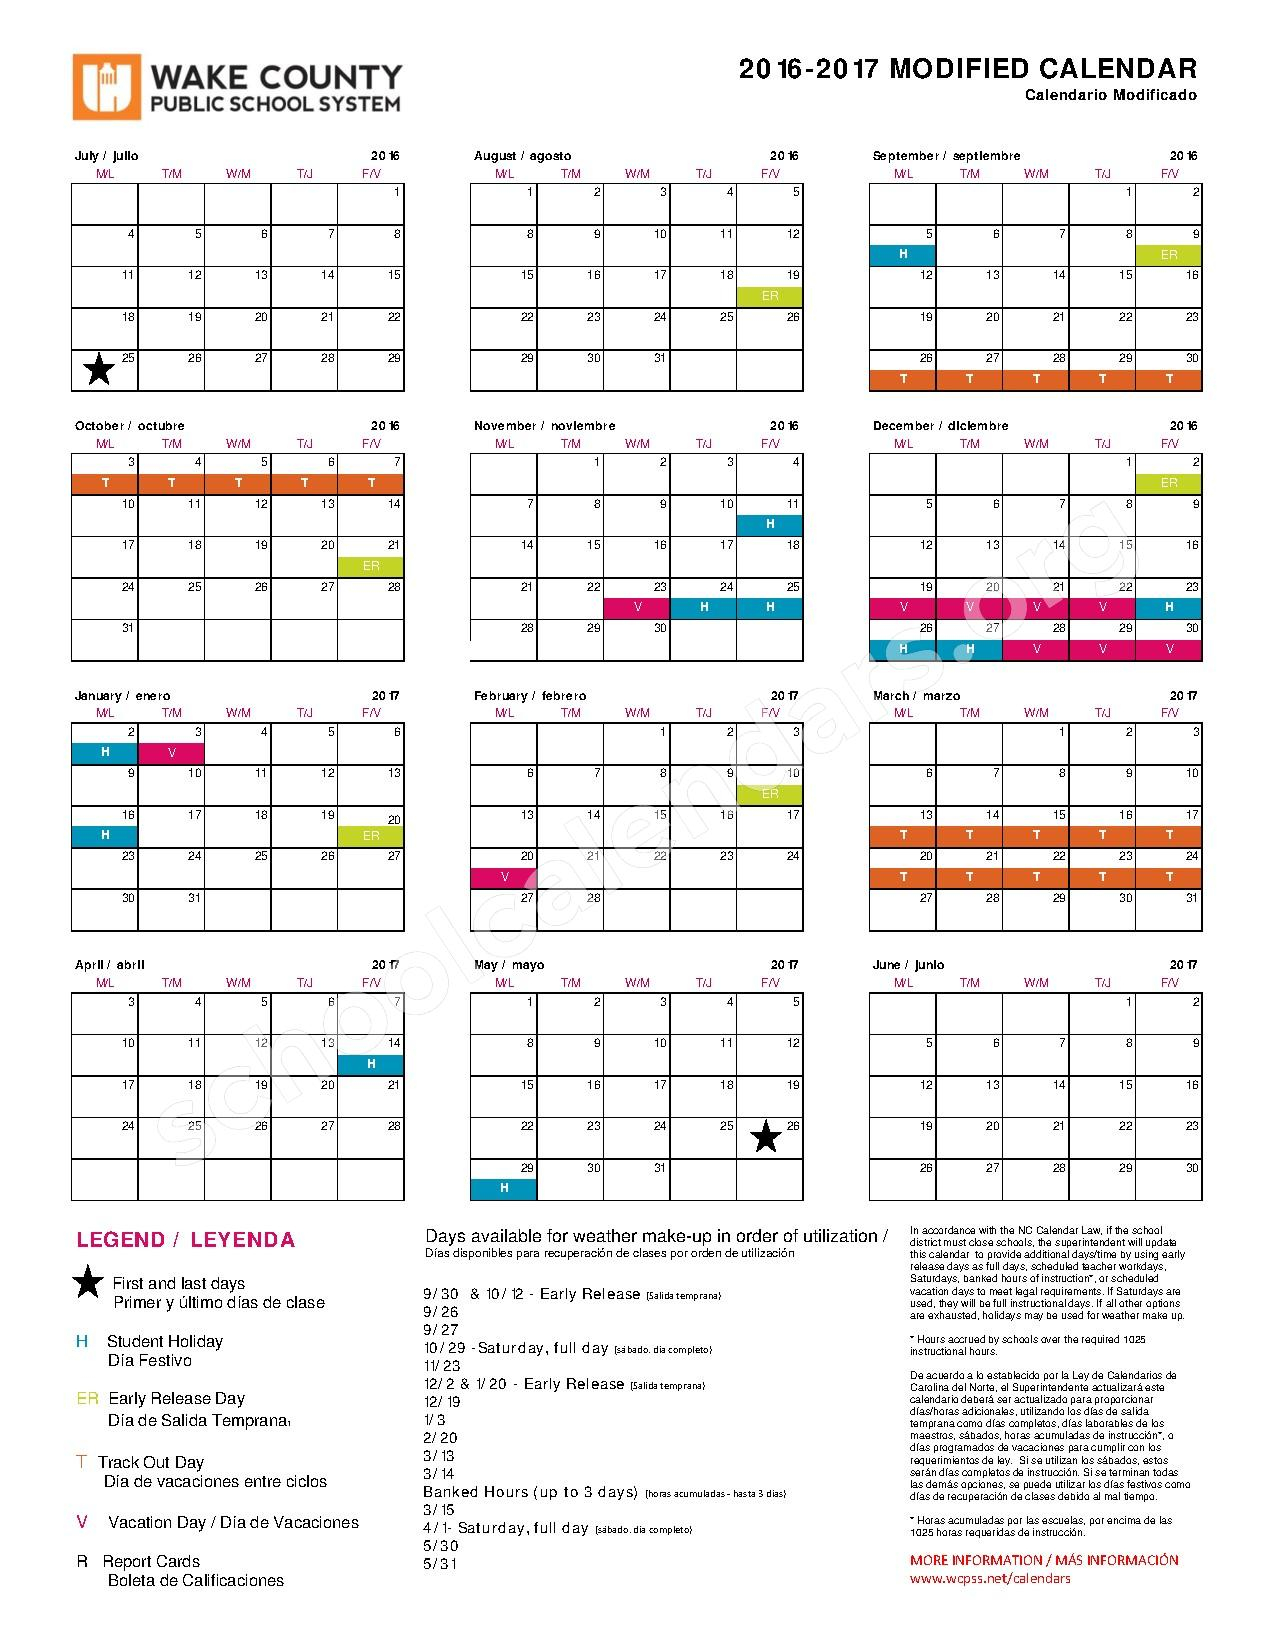 Wake County Modified Calendar